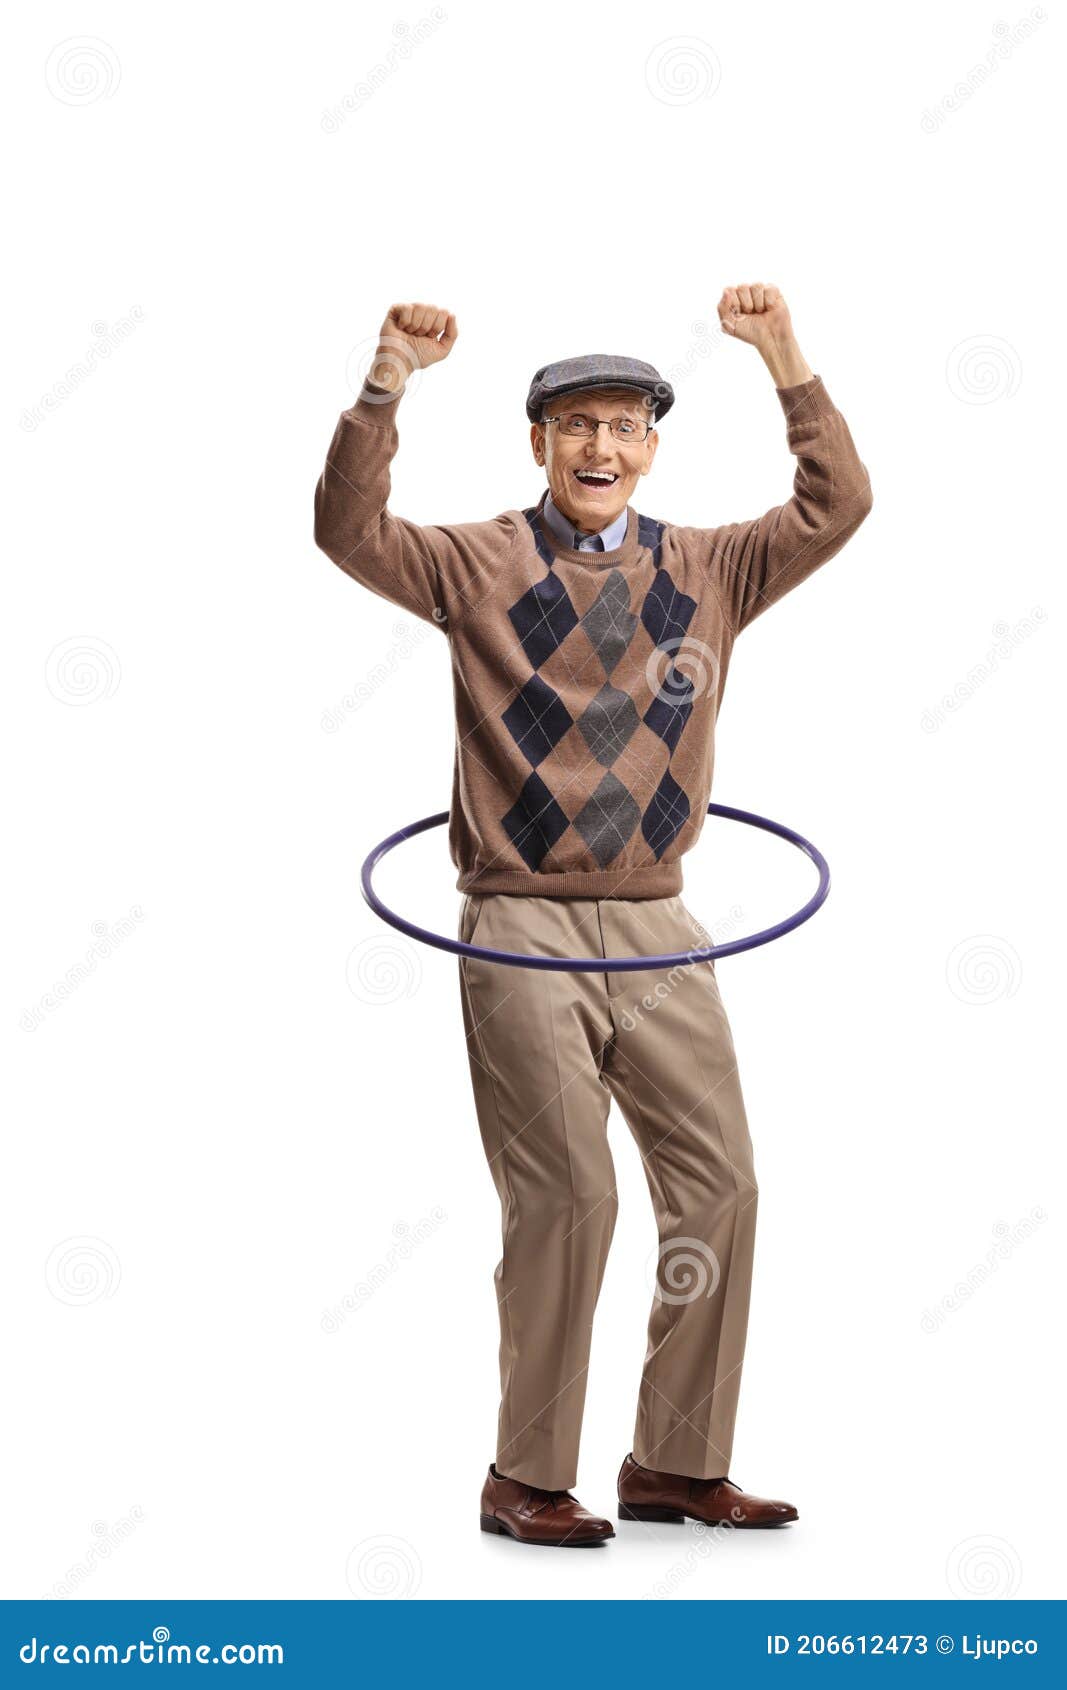 https://thumbs.dreamstime.com/z/full-length-portrait-happy-elderly-man-spinning-hula-hoop-full-length-portrait-happy-elderly-man-spinning-hula-hoop-206612473.jpg